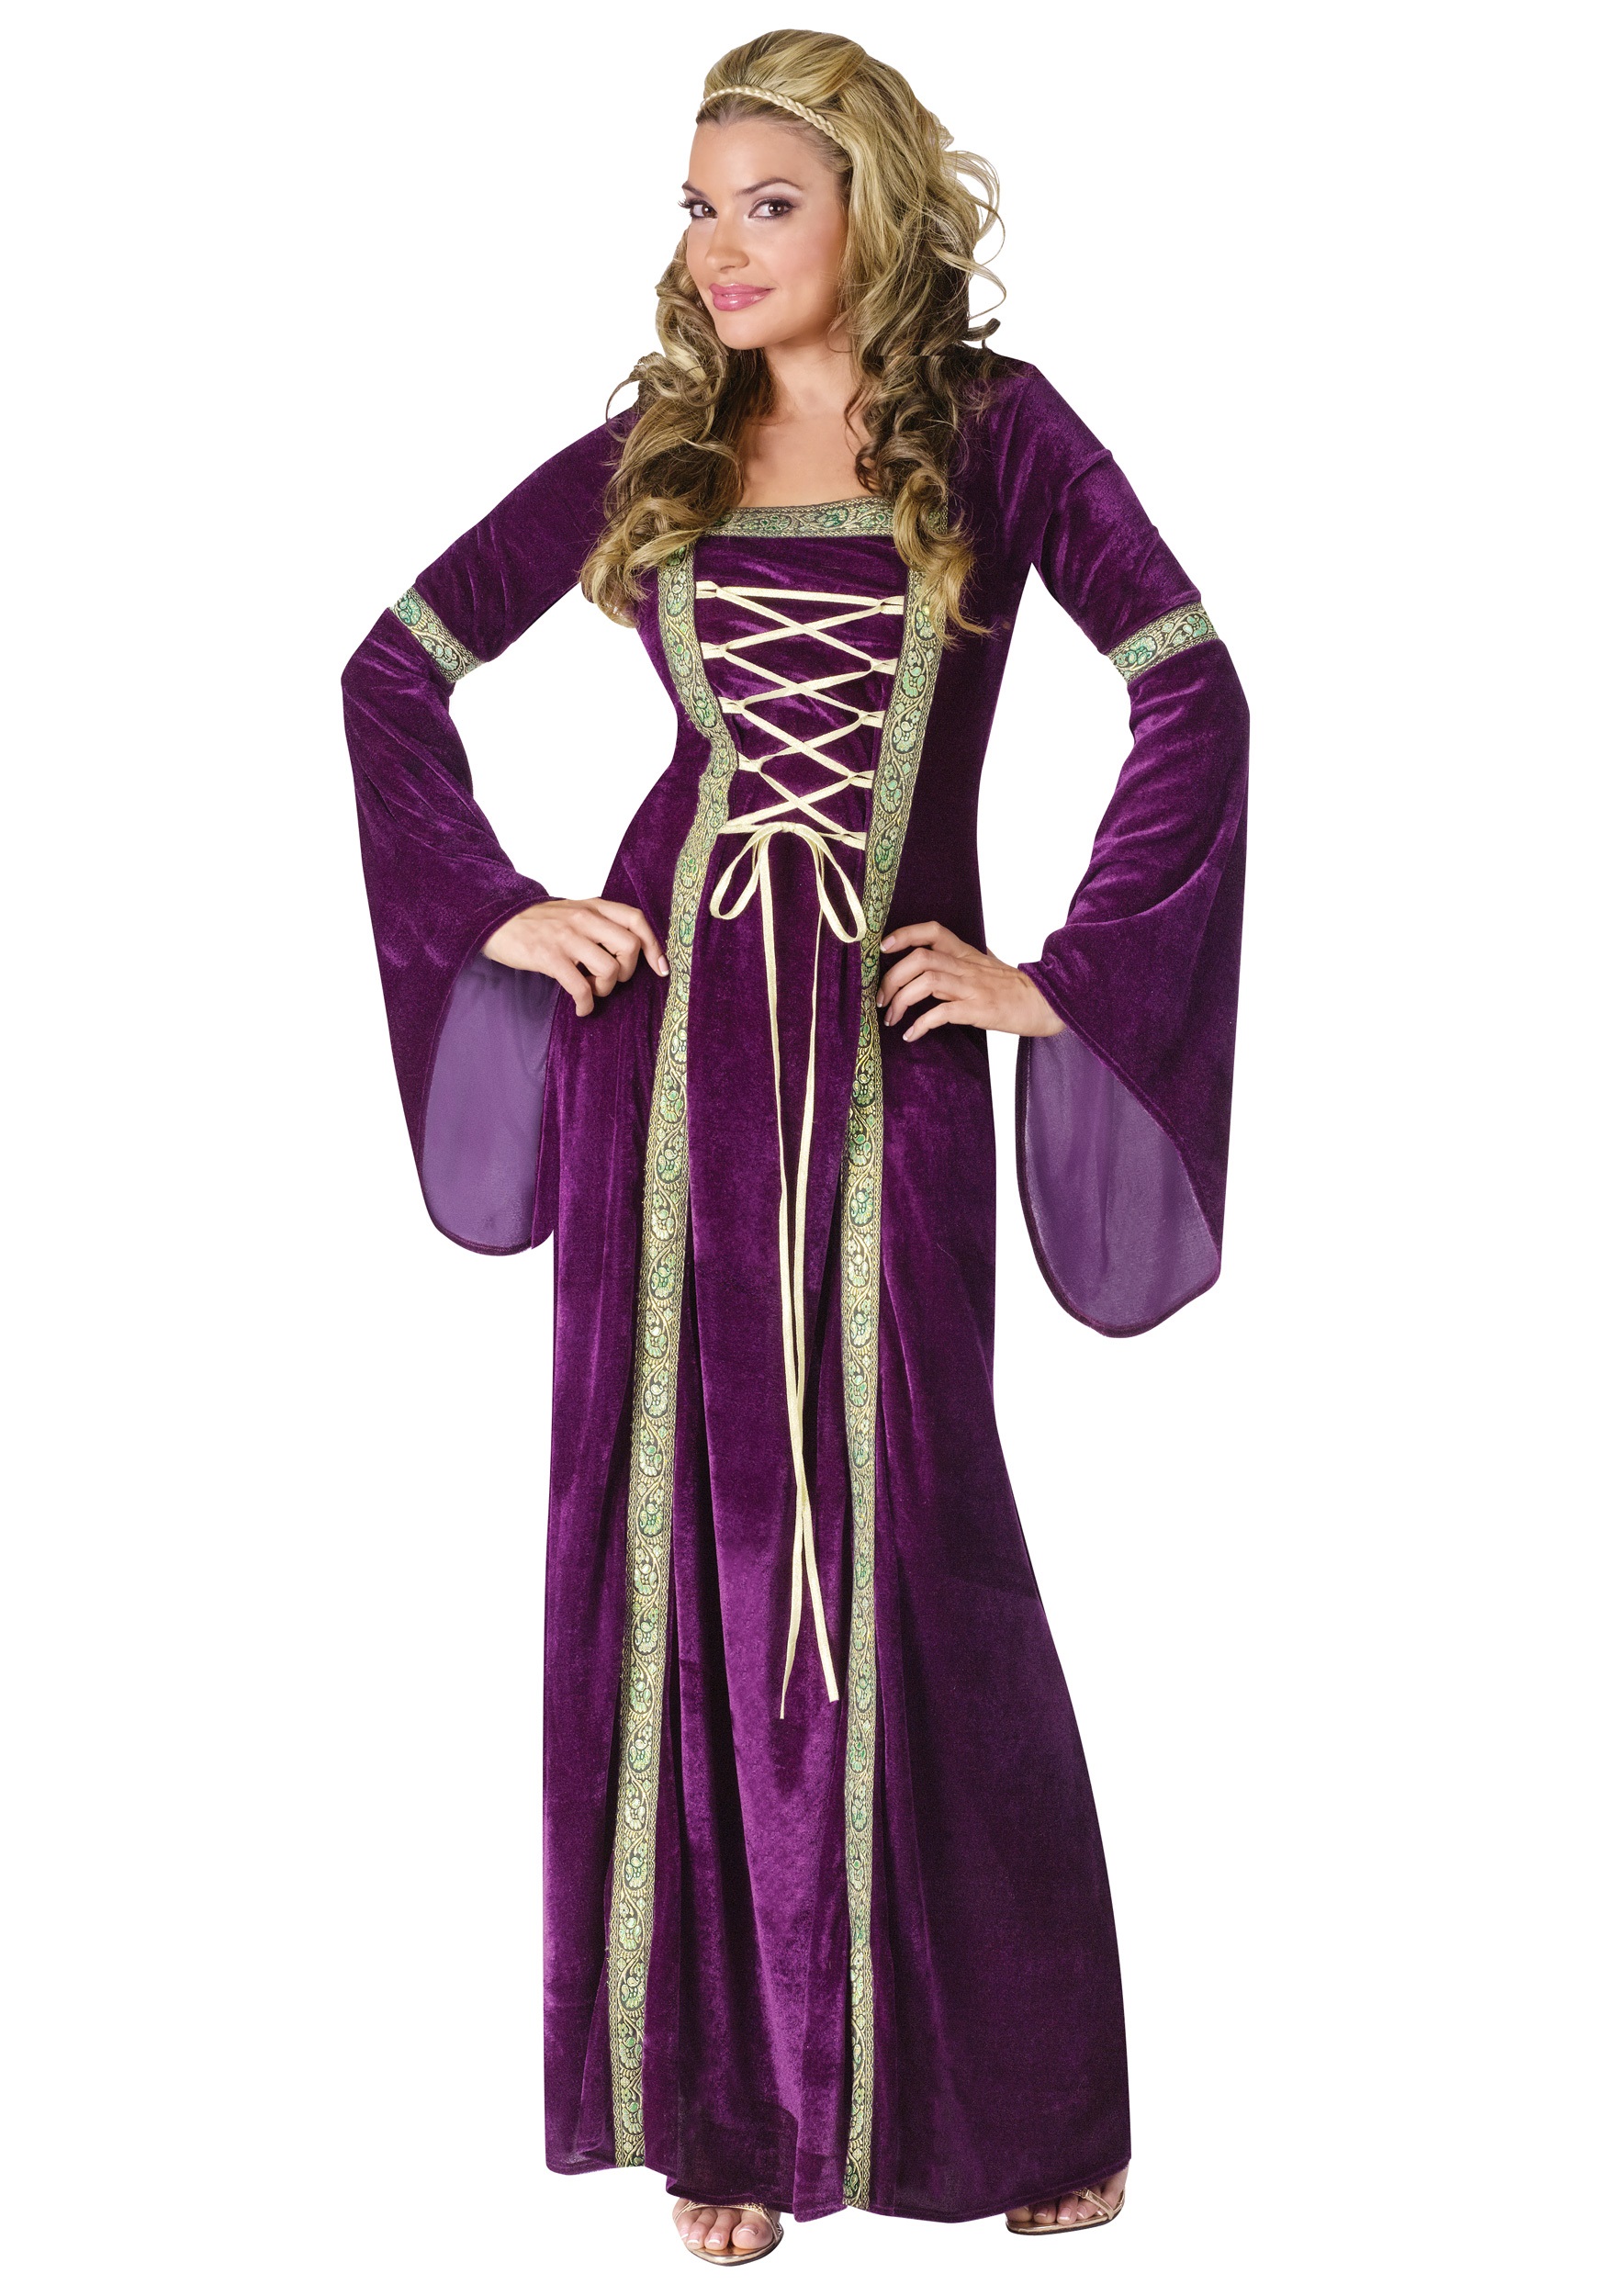 Renaissance Lady Fancy Dress Costume For Women